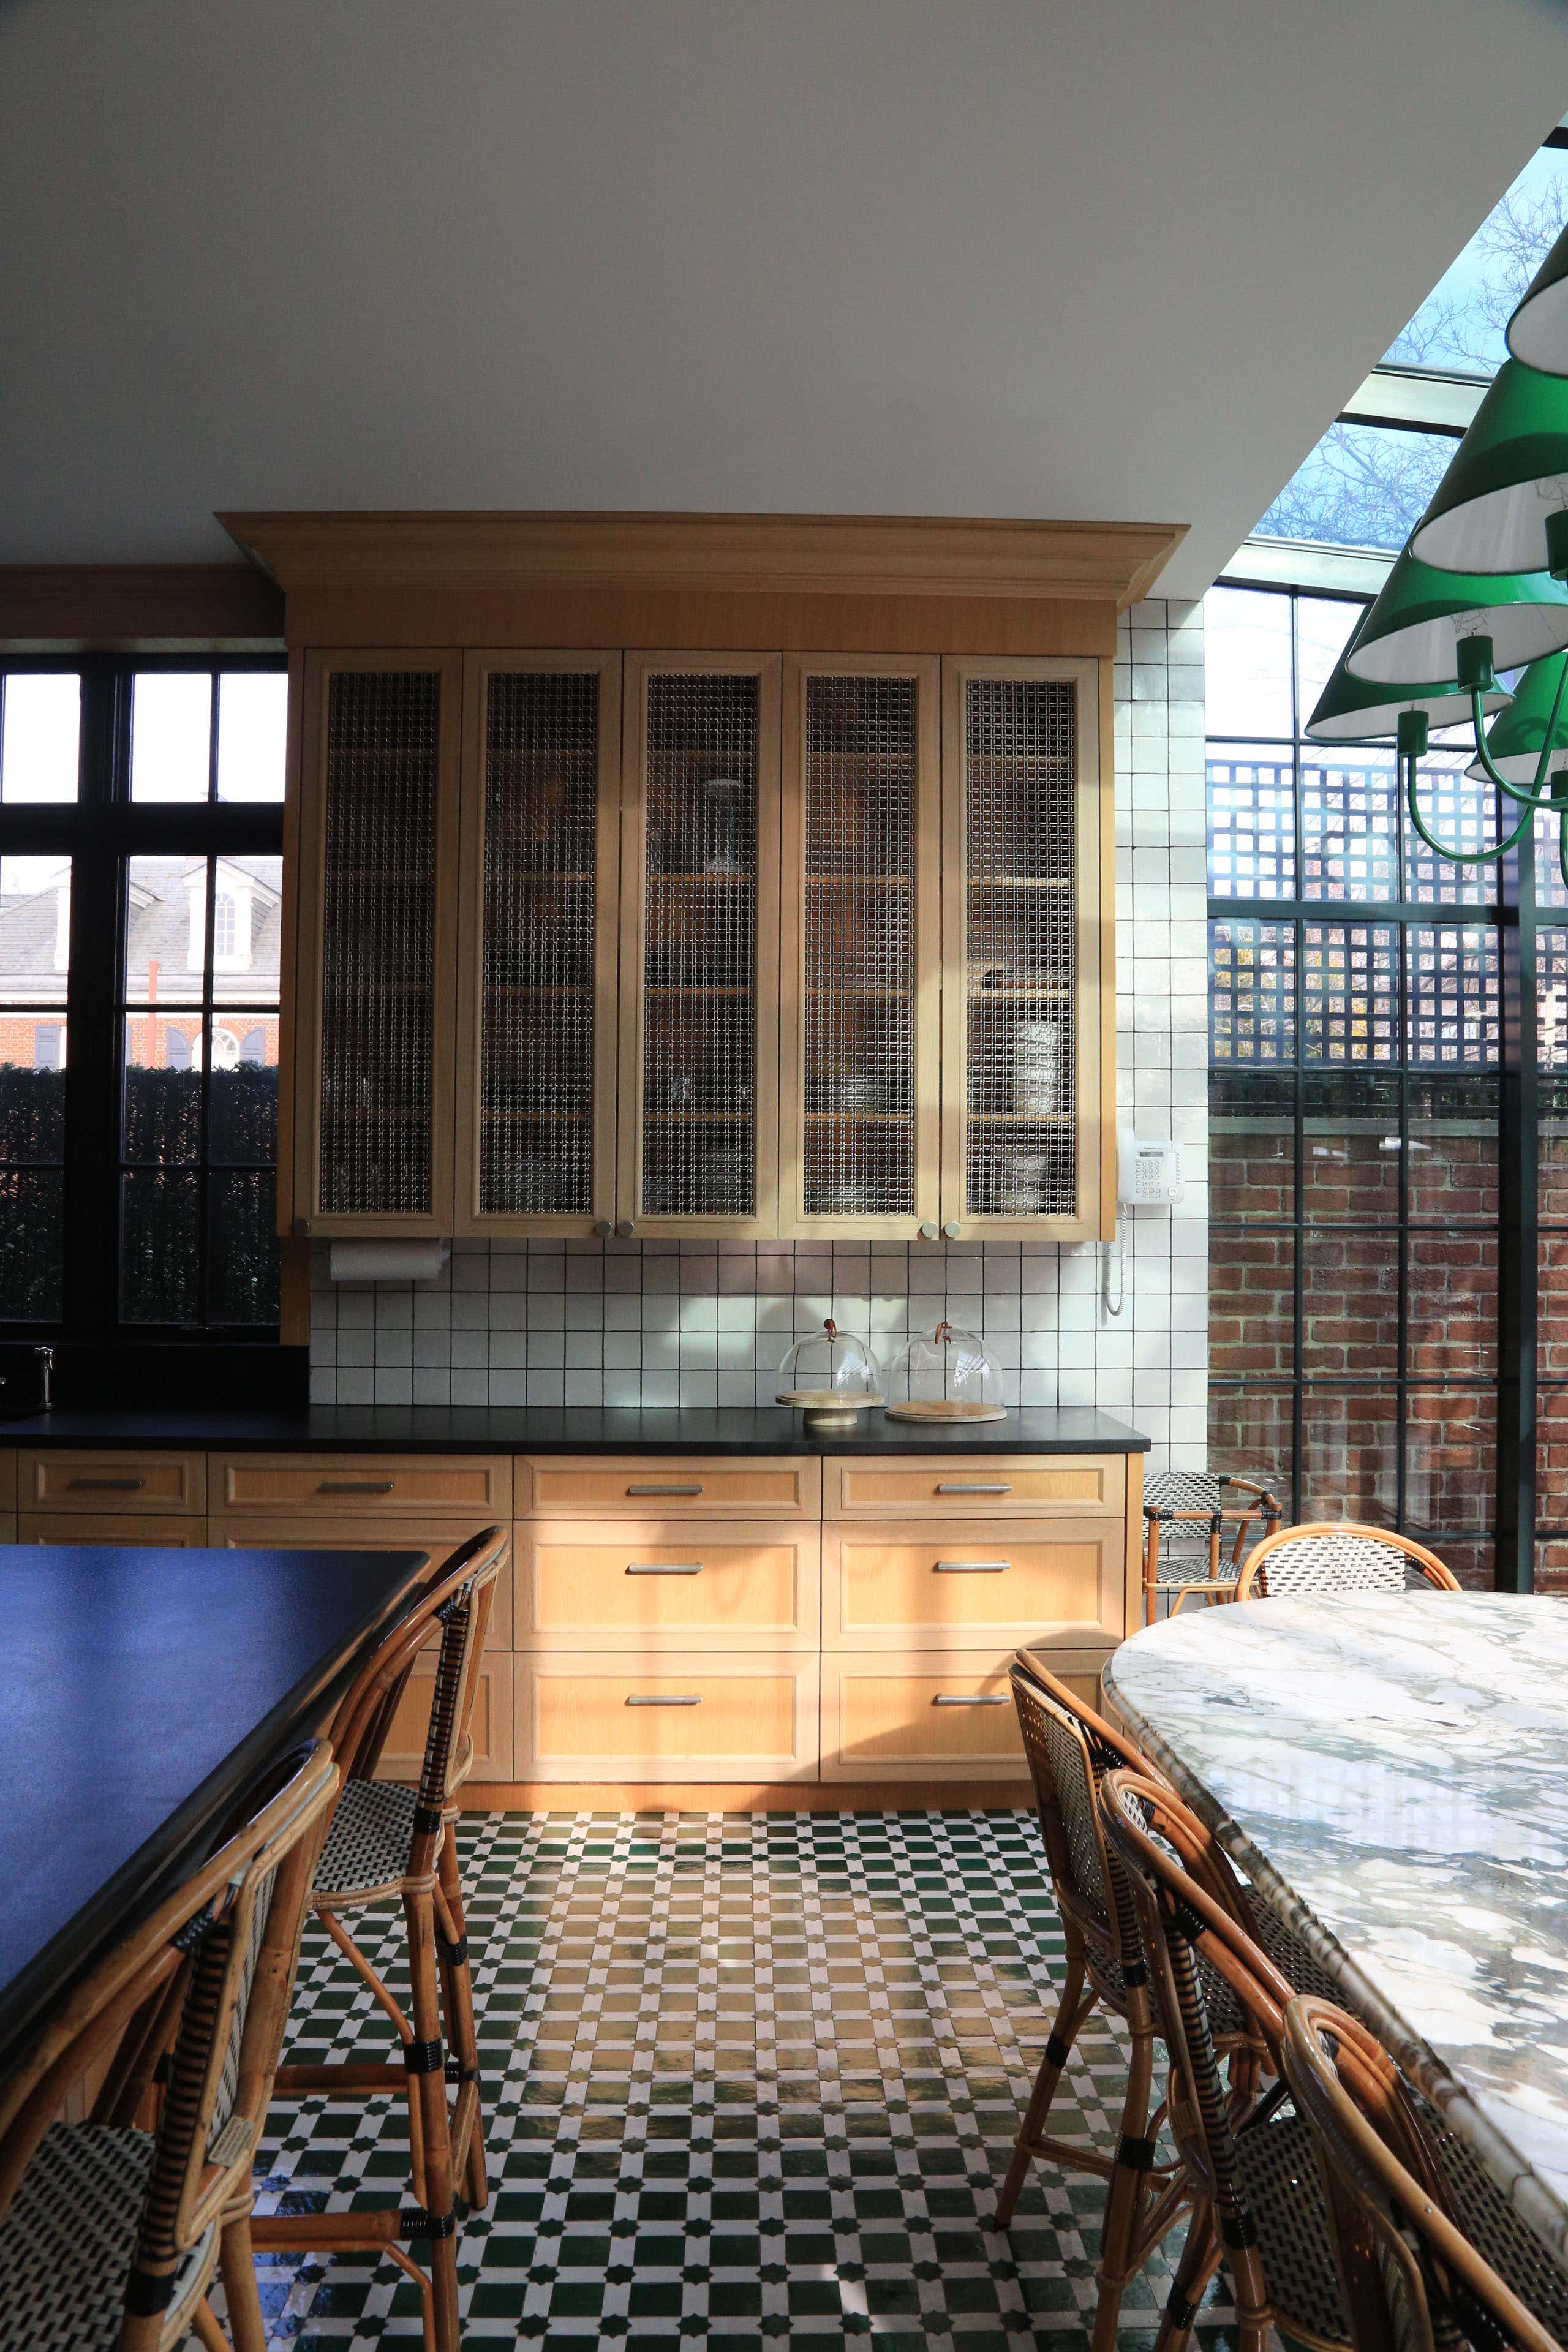 Art Deco Kitchen